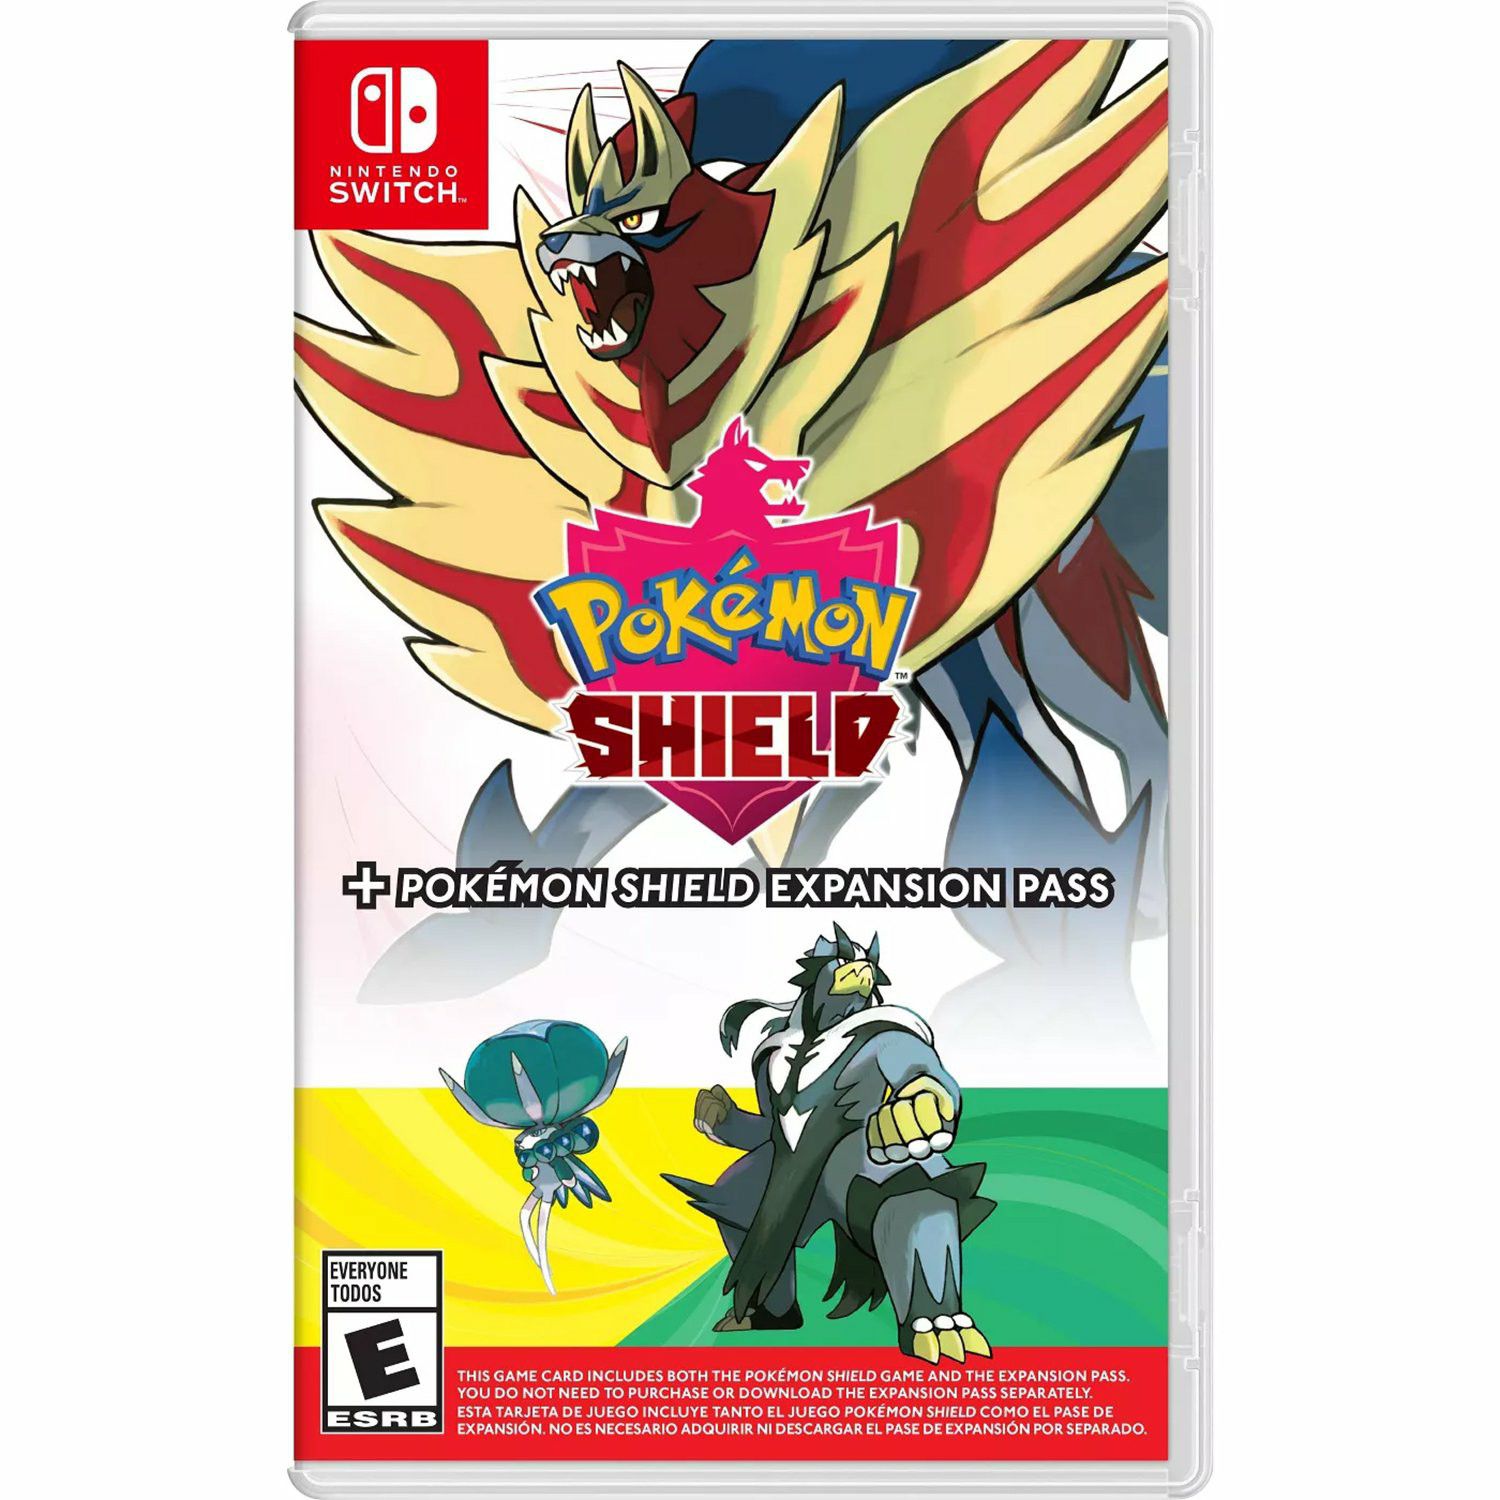 Pokemon shield + expansion pass (no case)